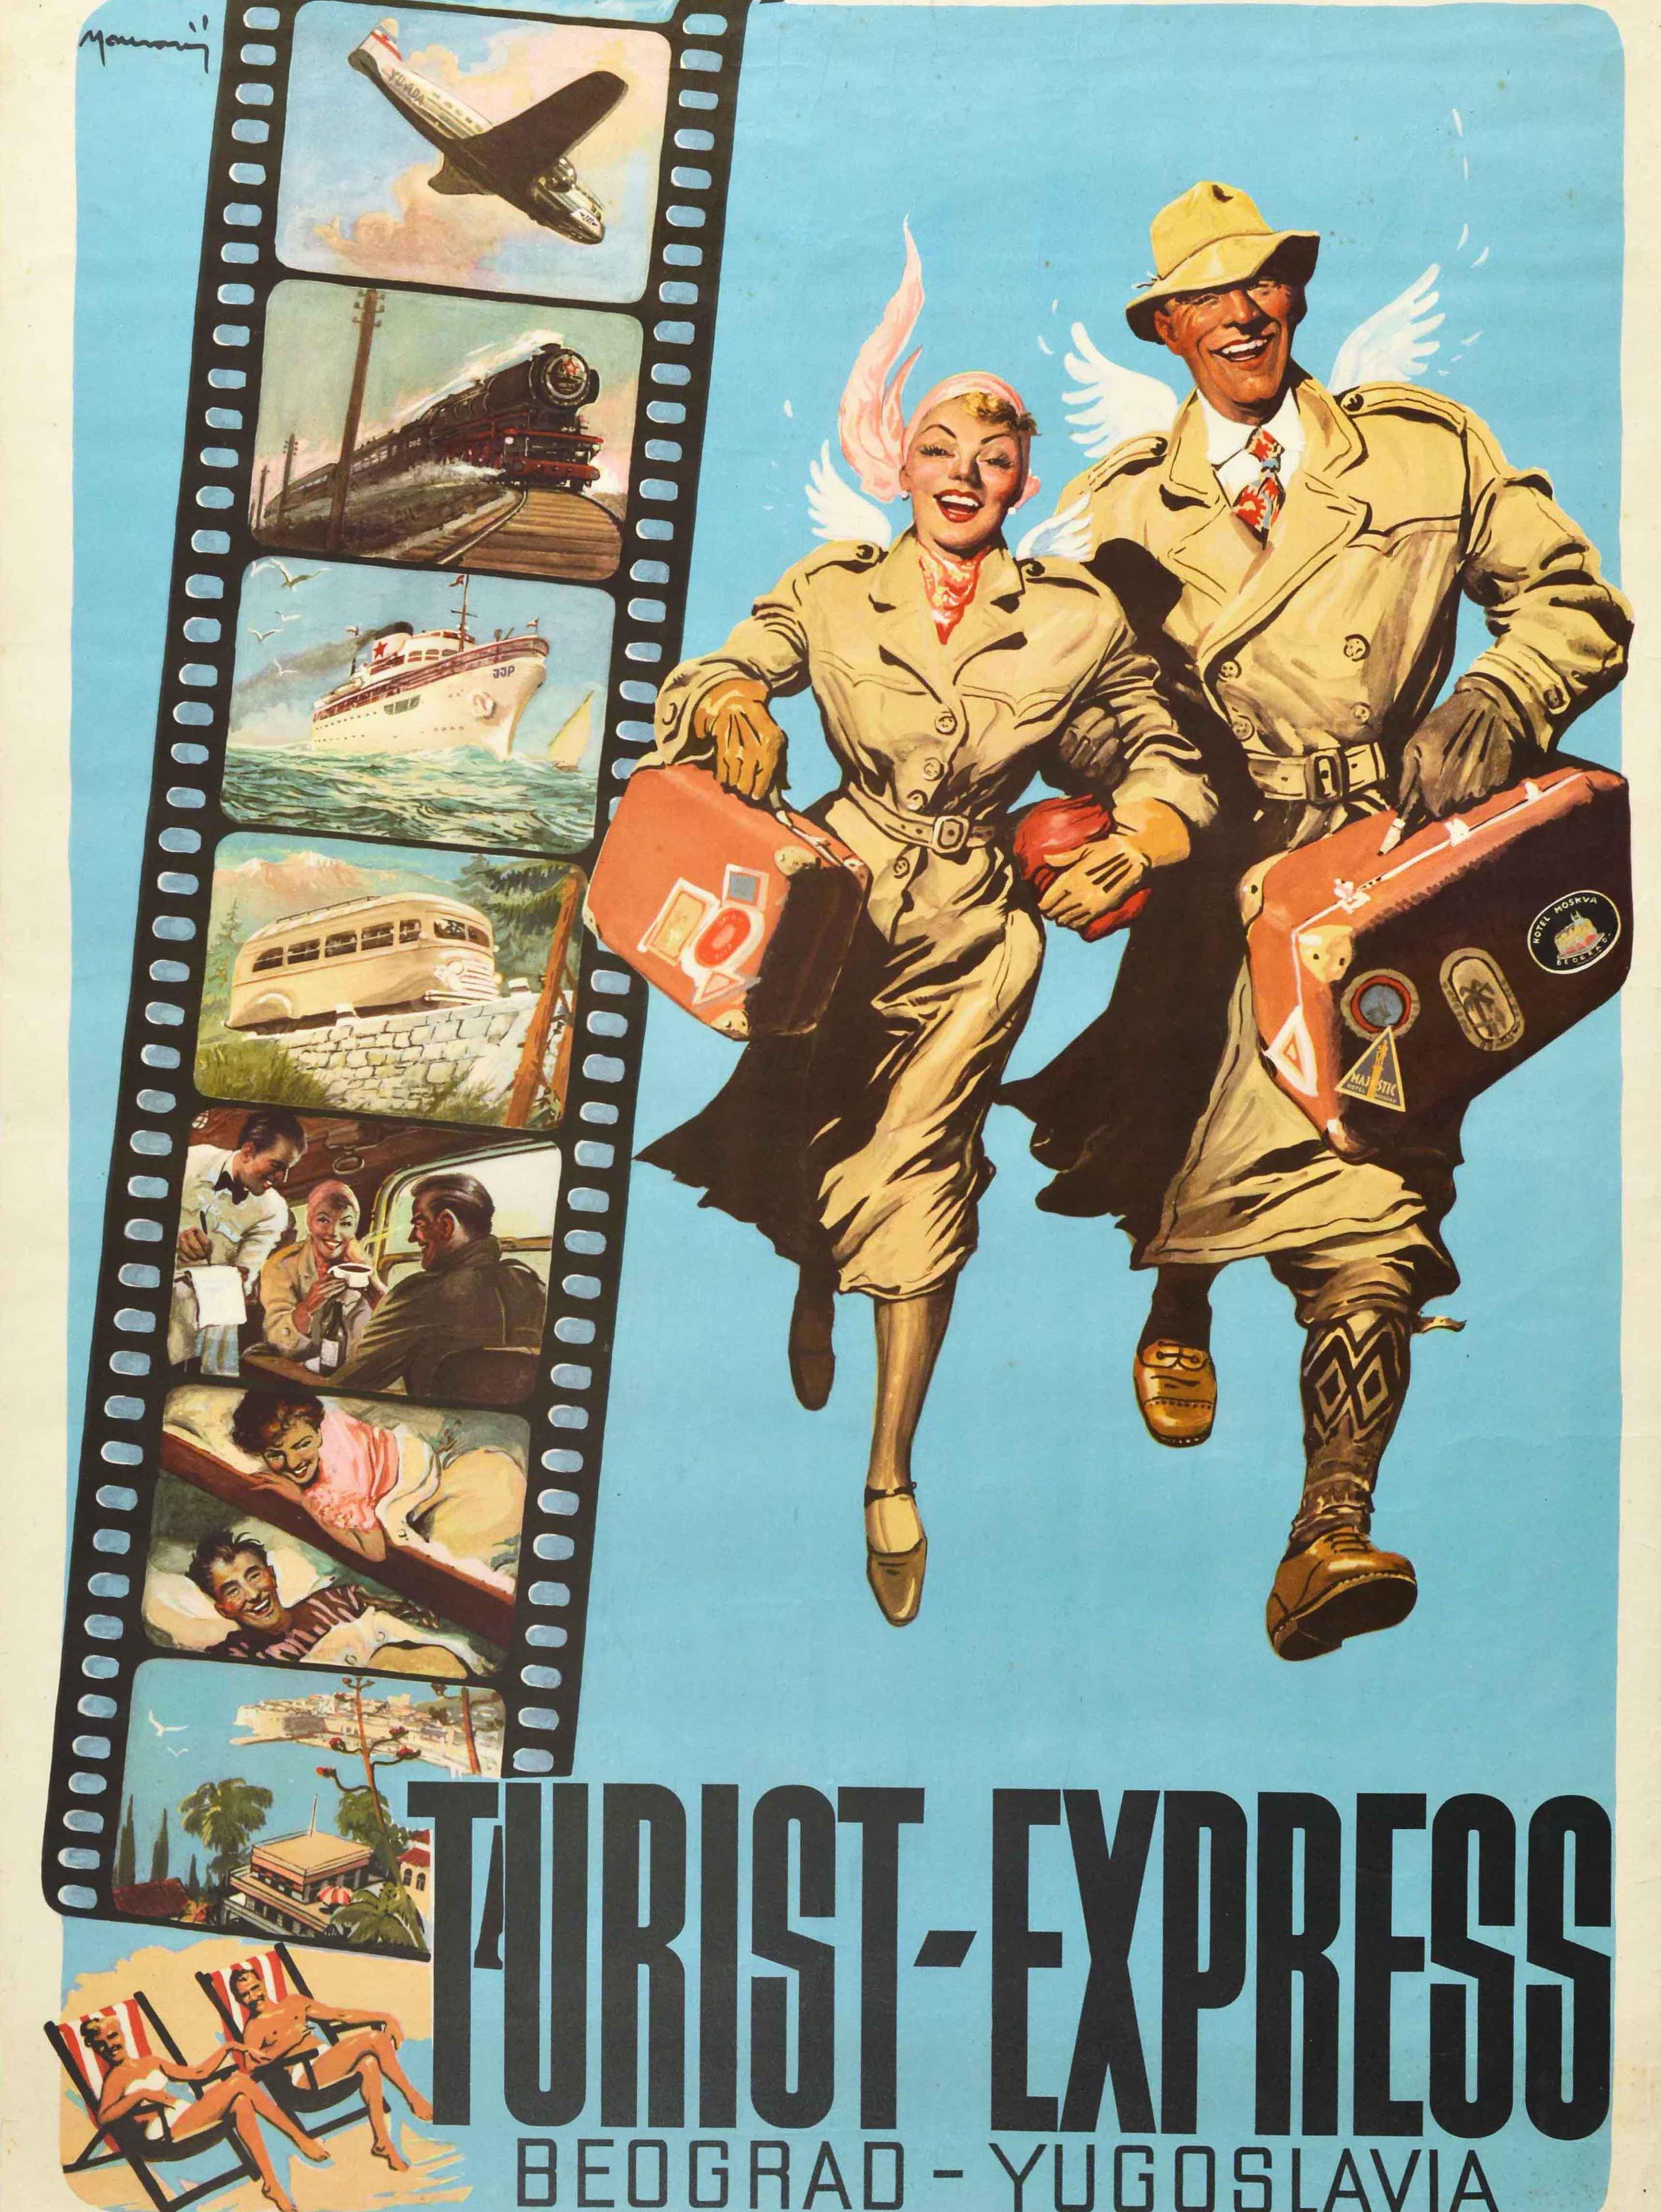 yugoslavia propaganda poster